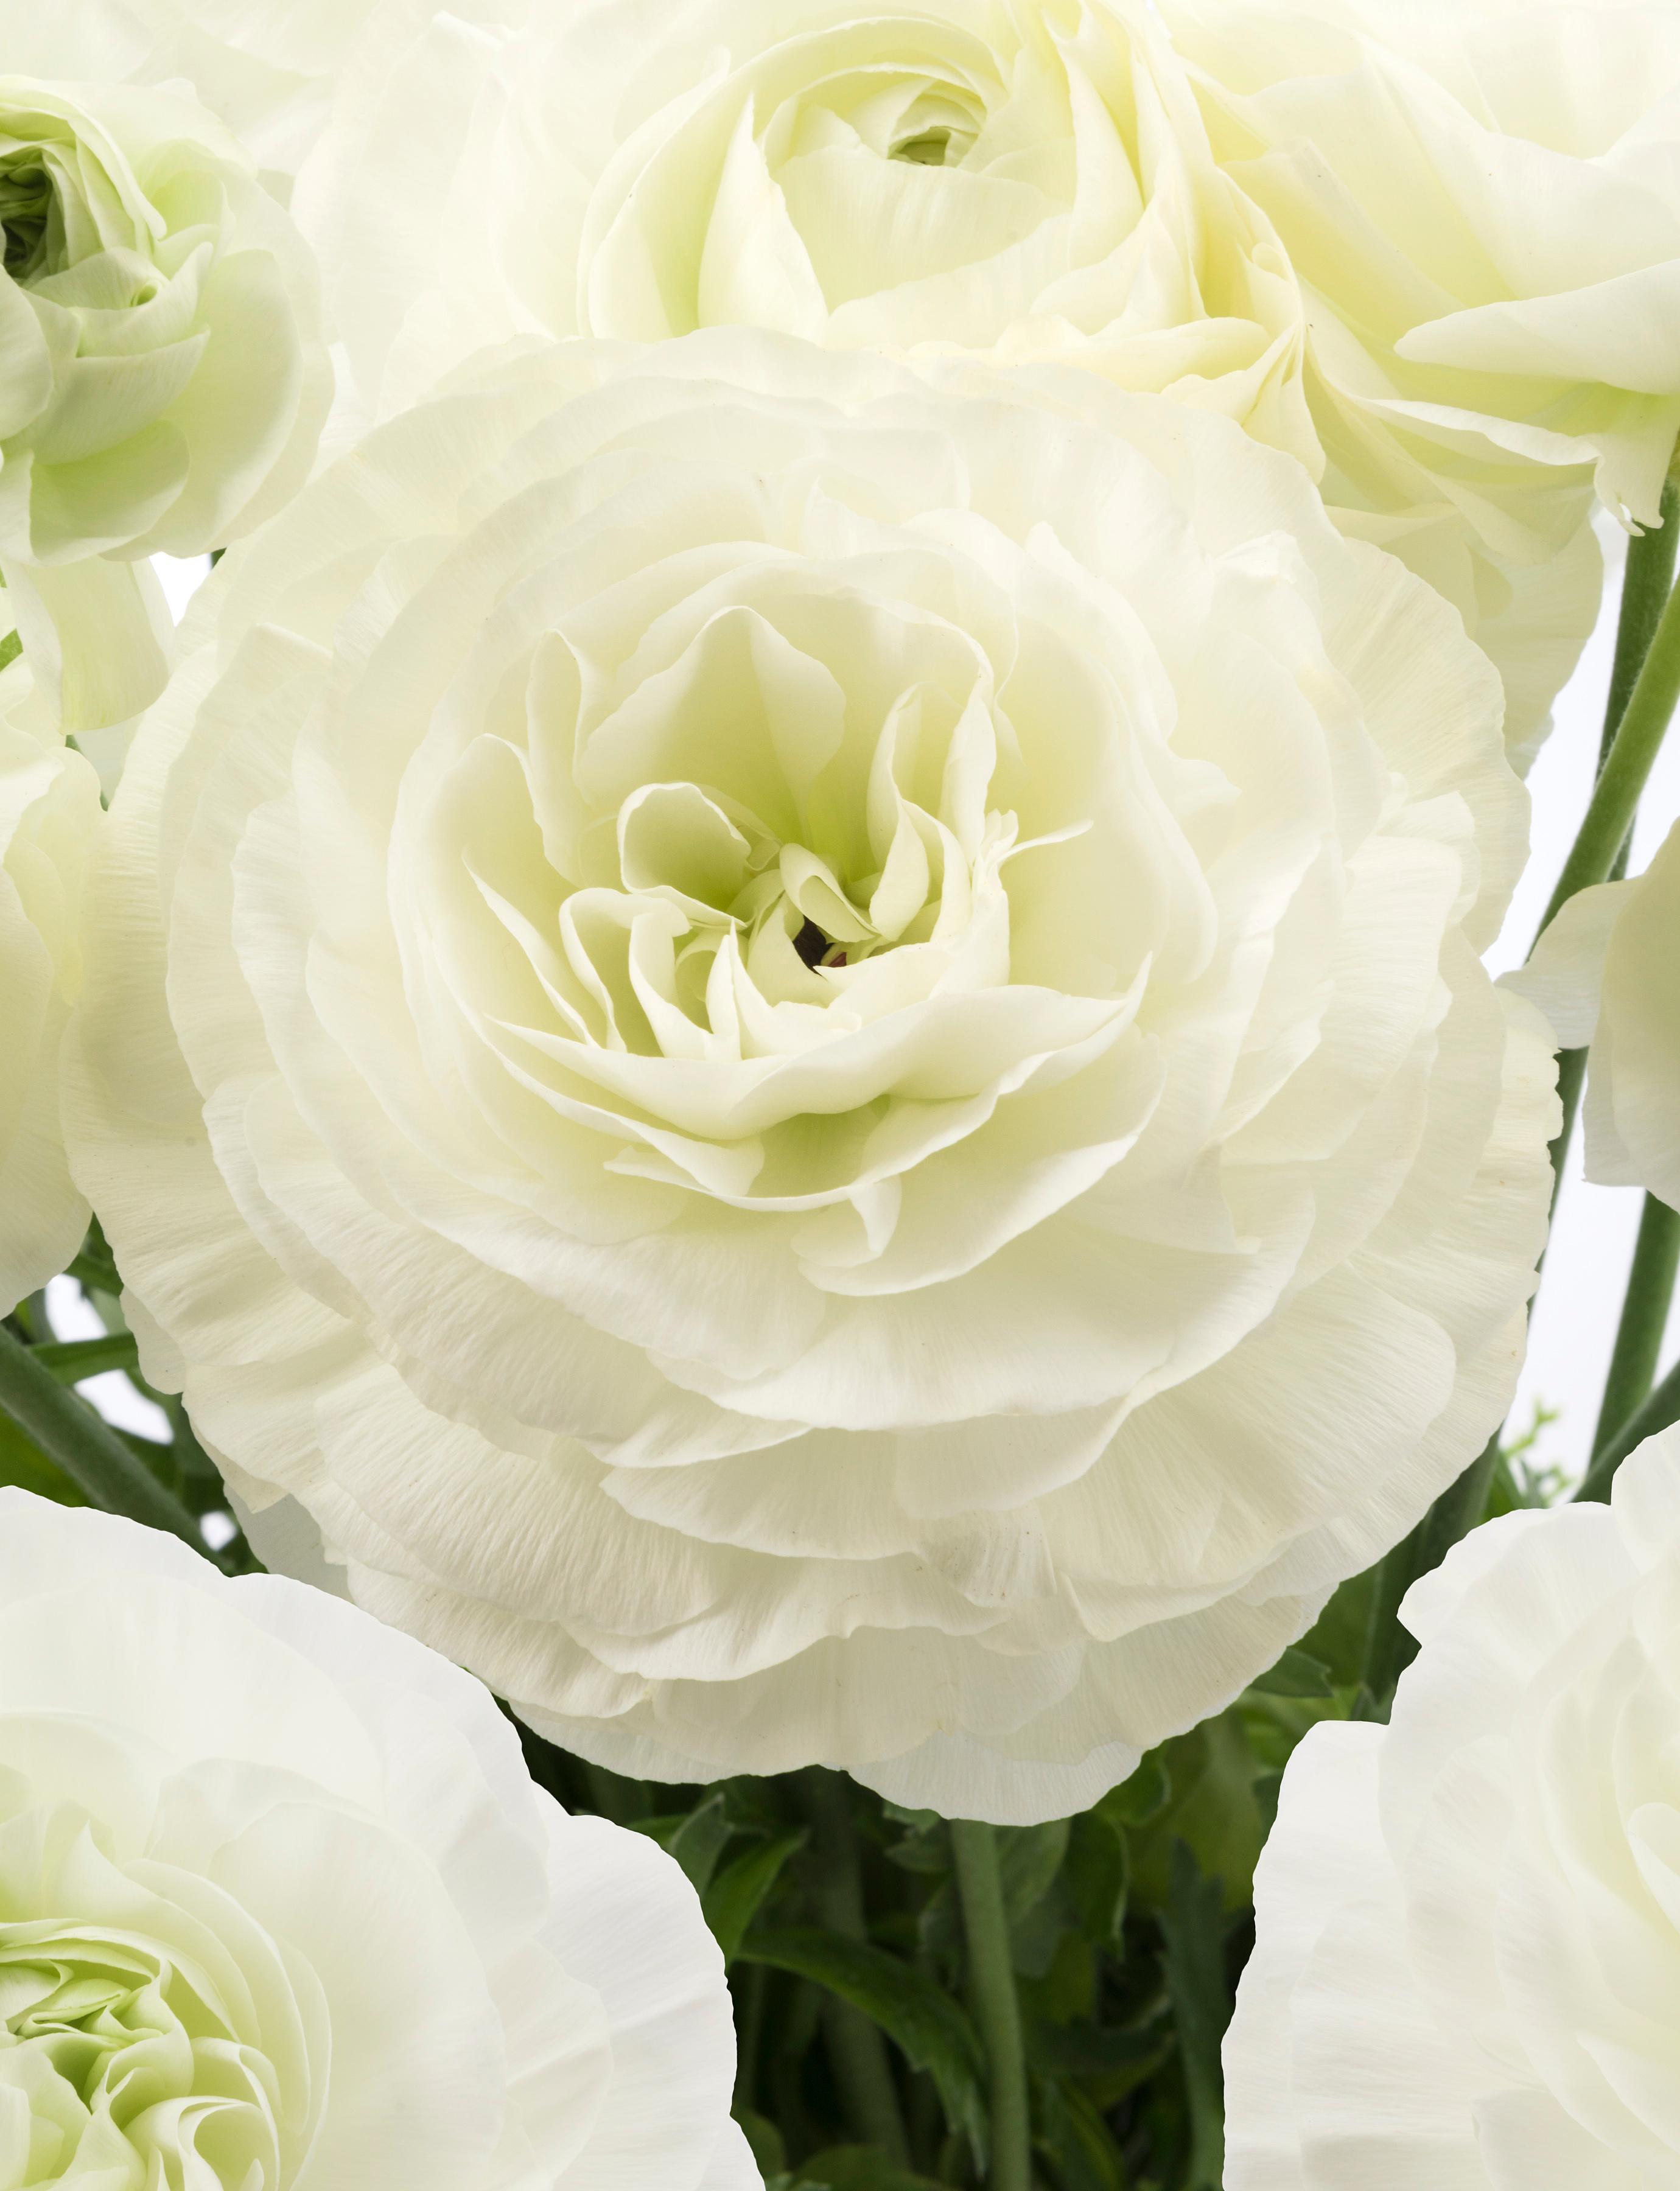 Ranunculus Romance 'Courchevel' - from Leo Berbee Bulb Company